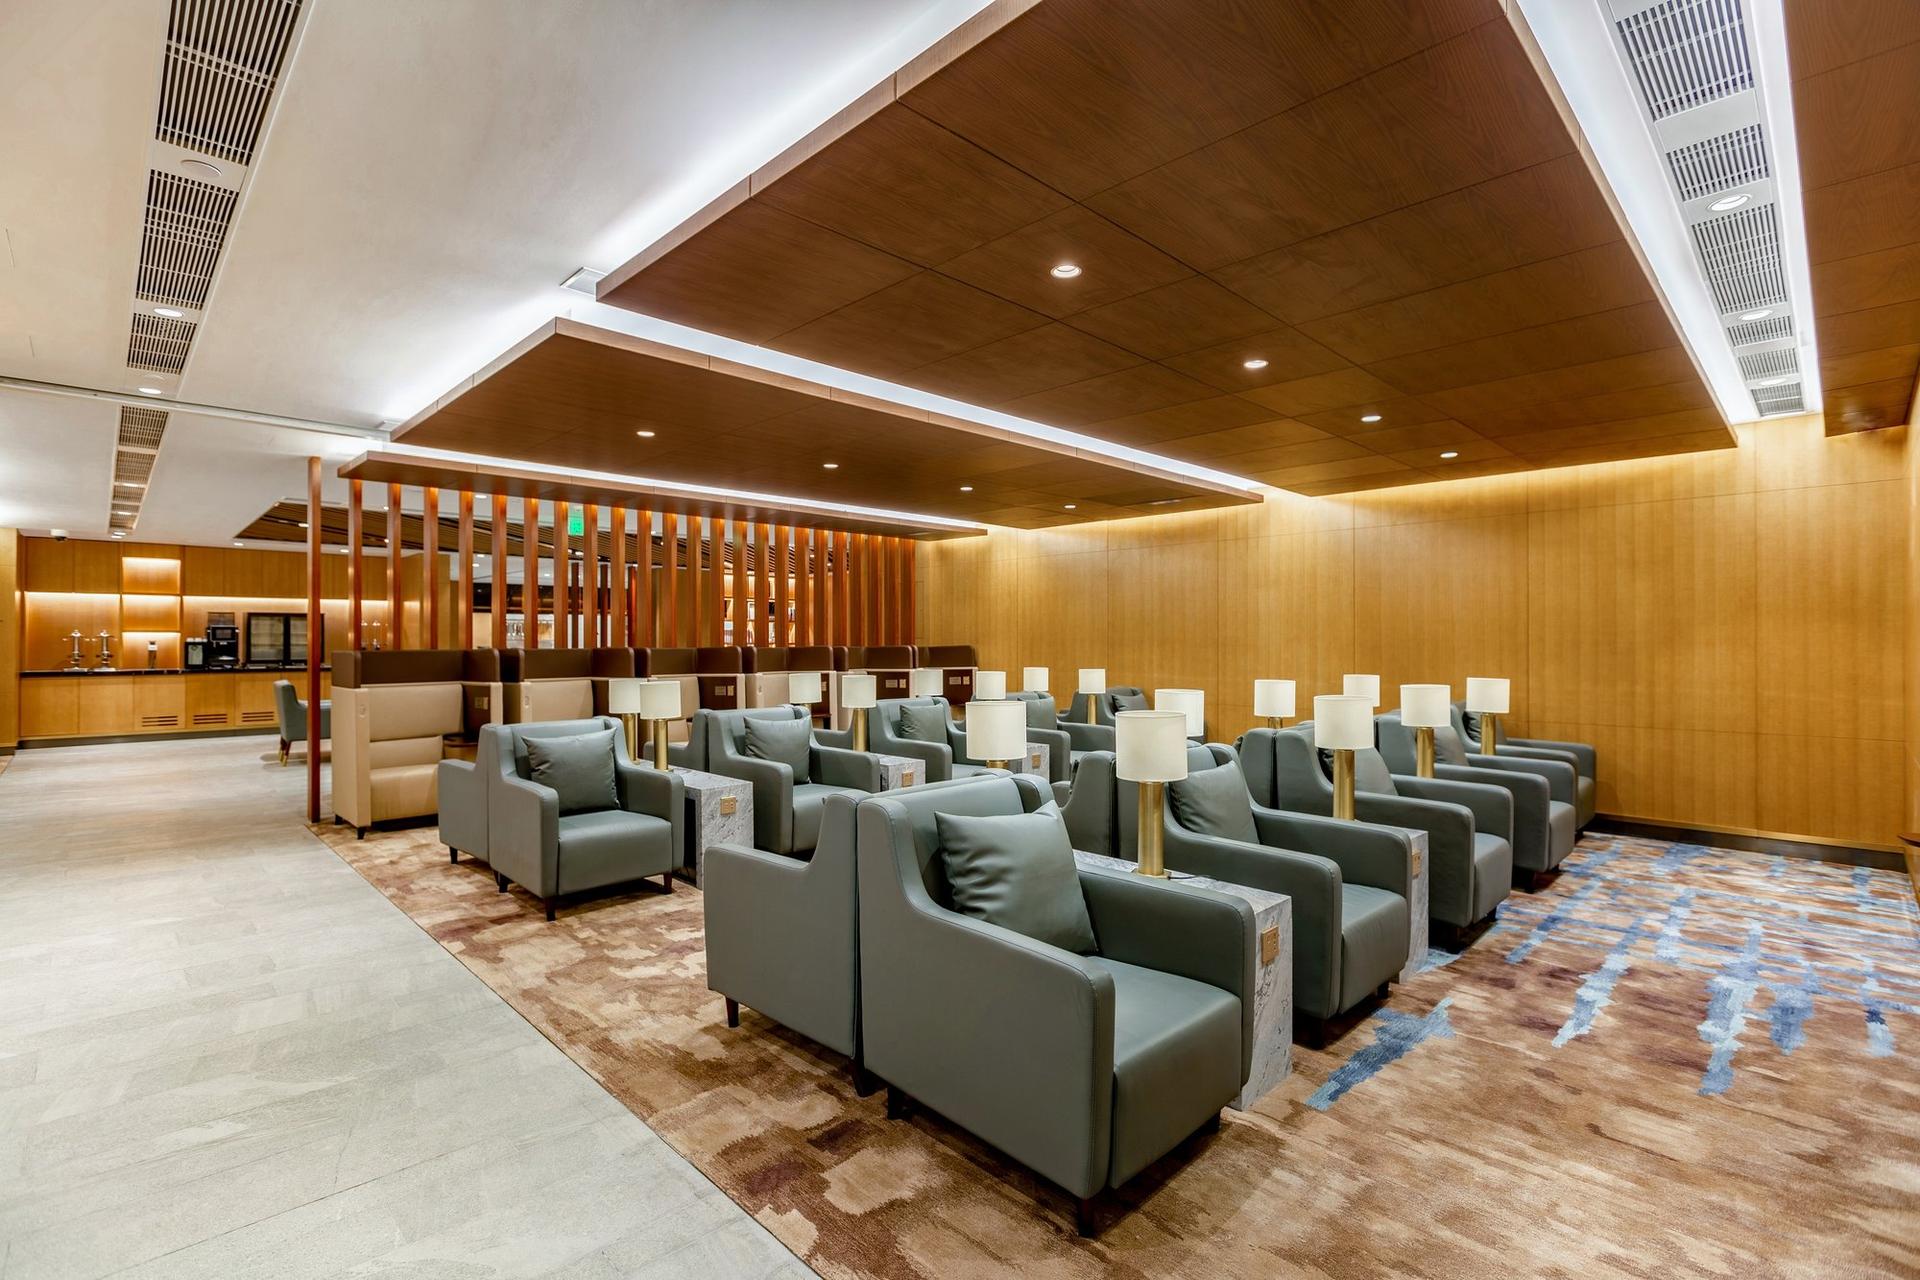 Plaza Premium Lounge (Members Area) image 2 of 5